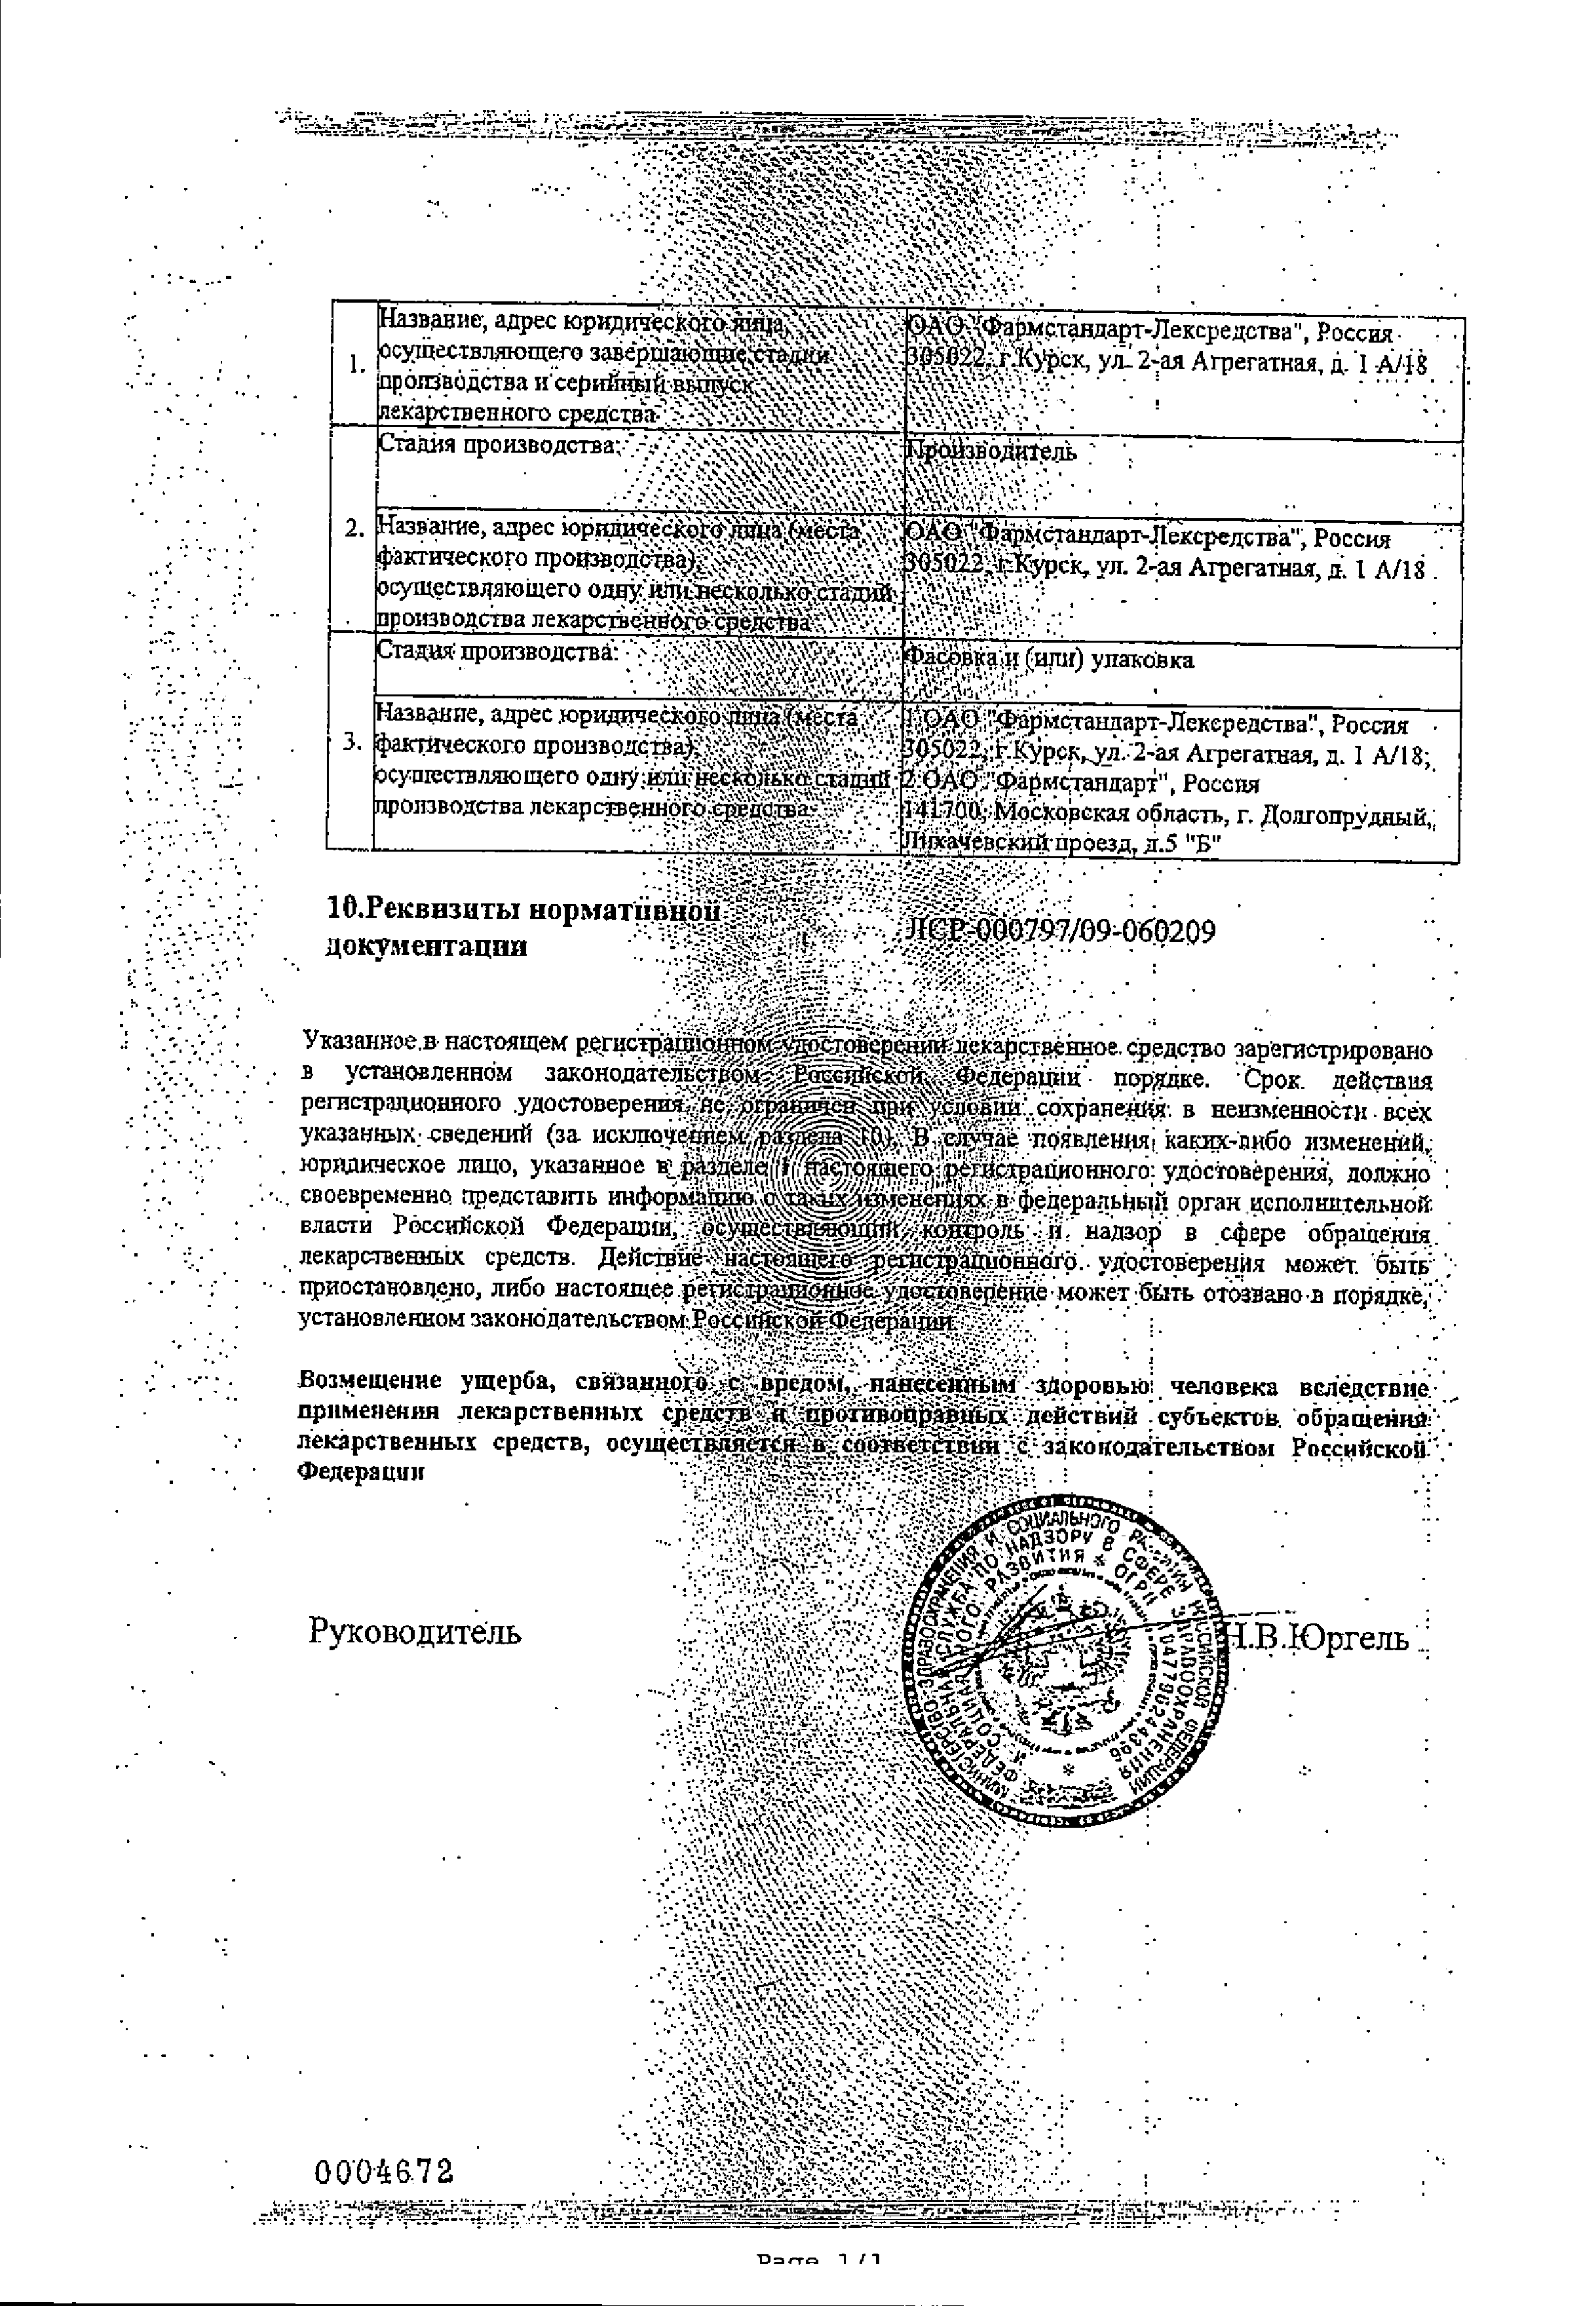 Мельдоний Фармстандарт сертификат